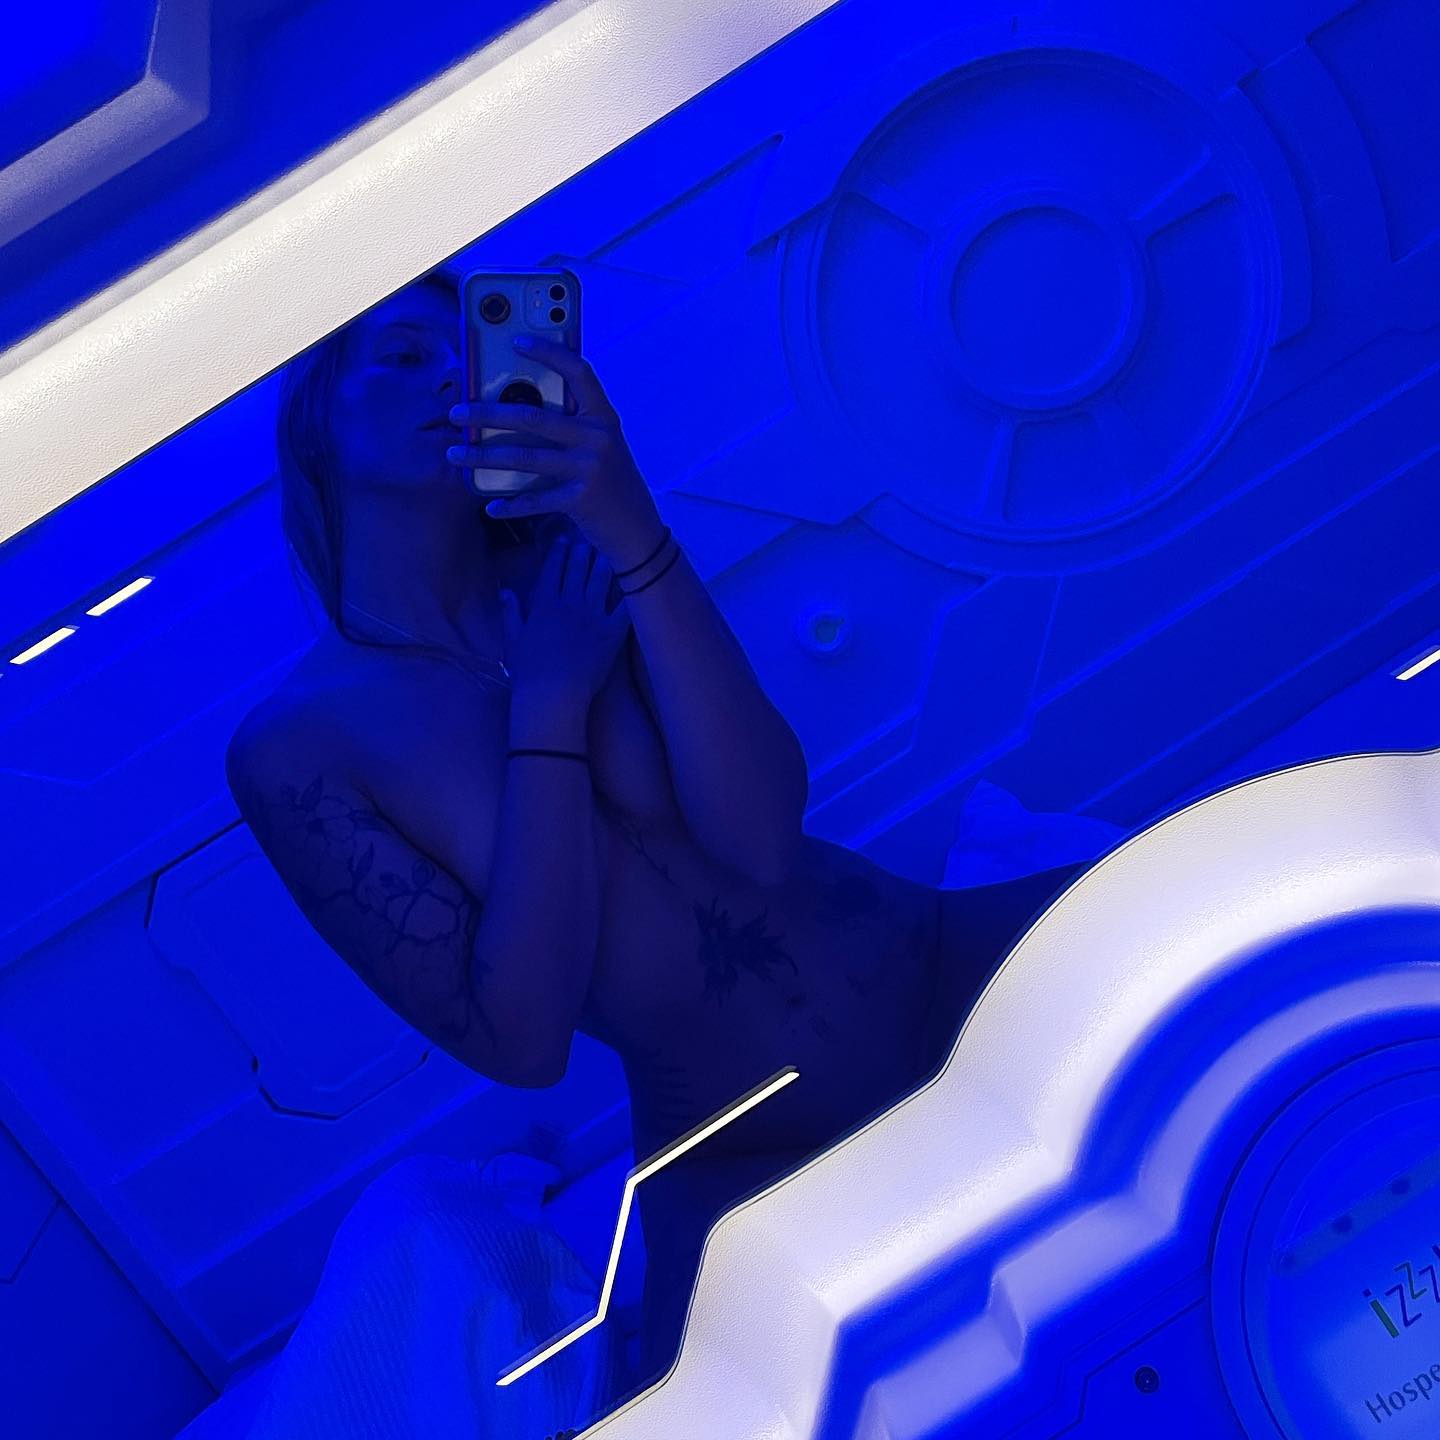 🌀

.

.

.

.

.

.

.

#blue #selfie #blueroom #sleepingpod #pod #podselfie #tattoos #blonde #blondewithtattoos #bodyart #poser